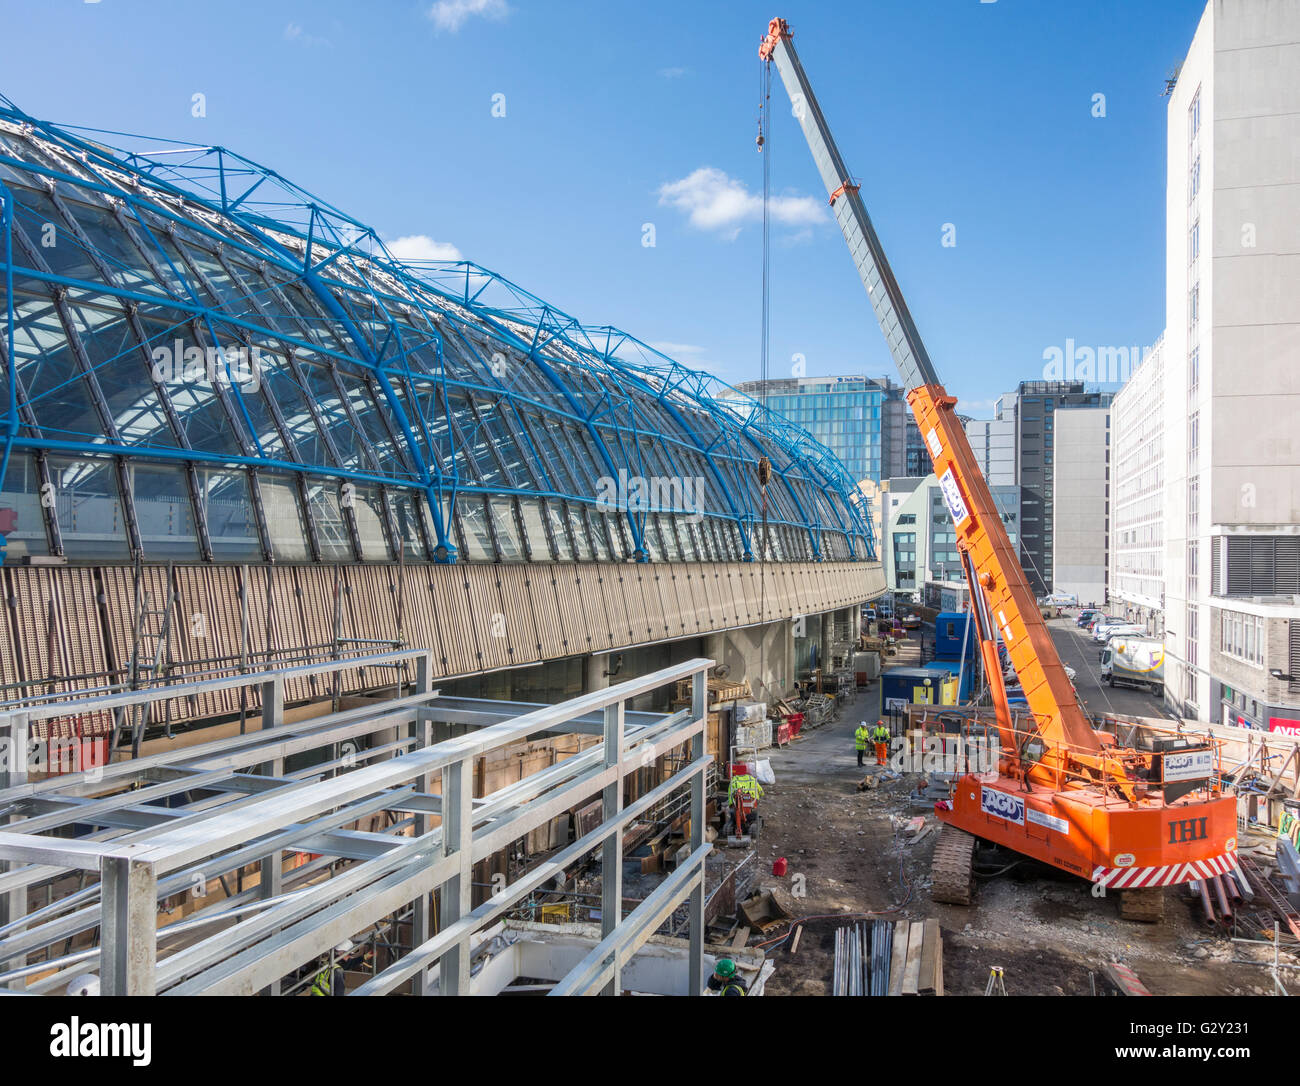 Construction work on the former Eurostar International Terminal at Waterloo Station to convert to standard platform, London, UK Stock Photo